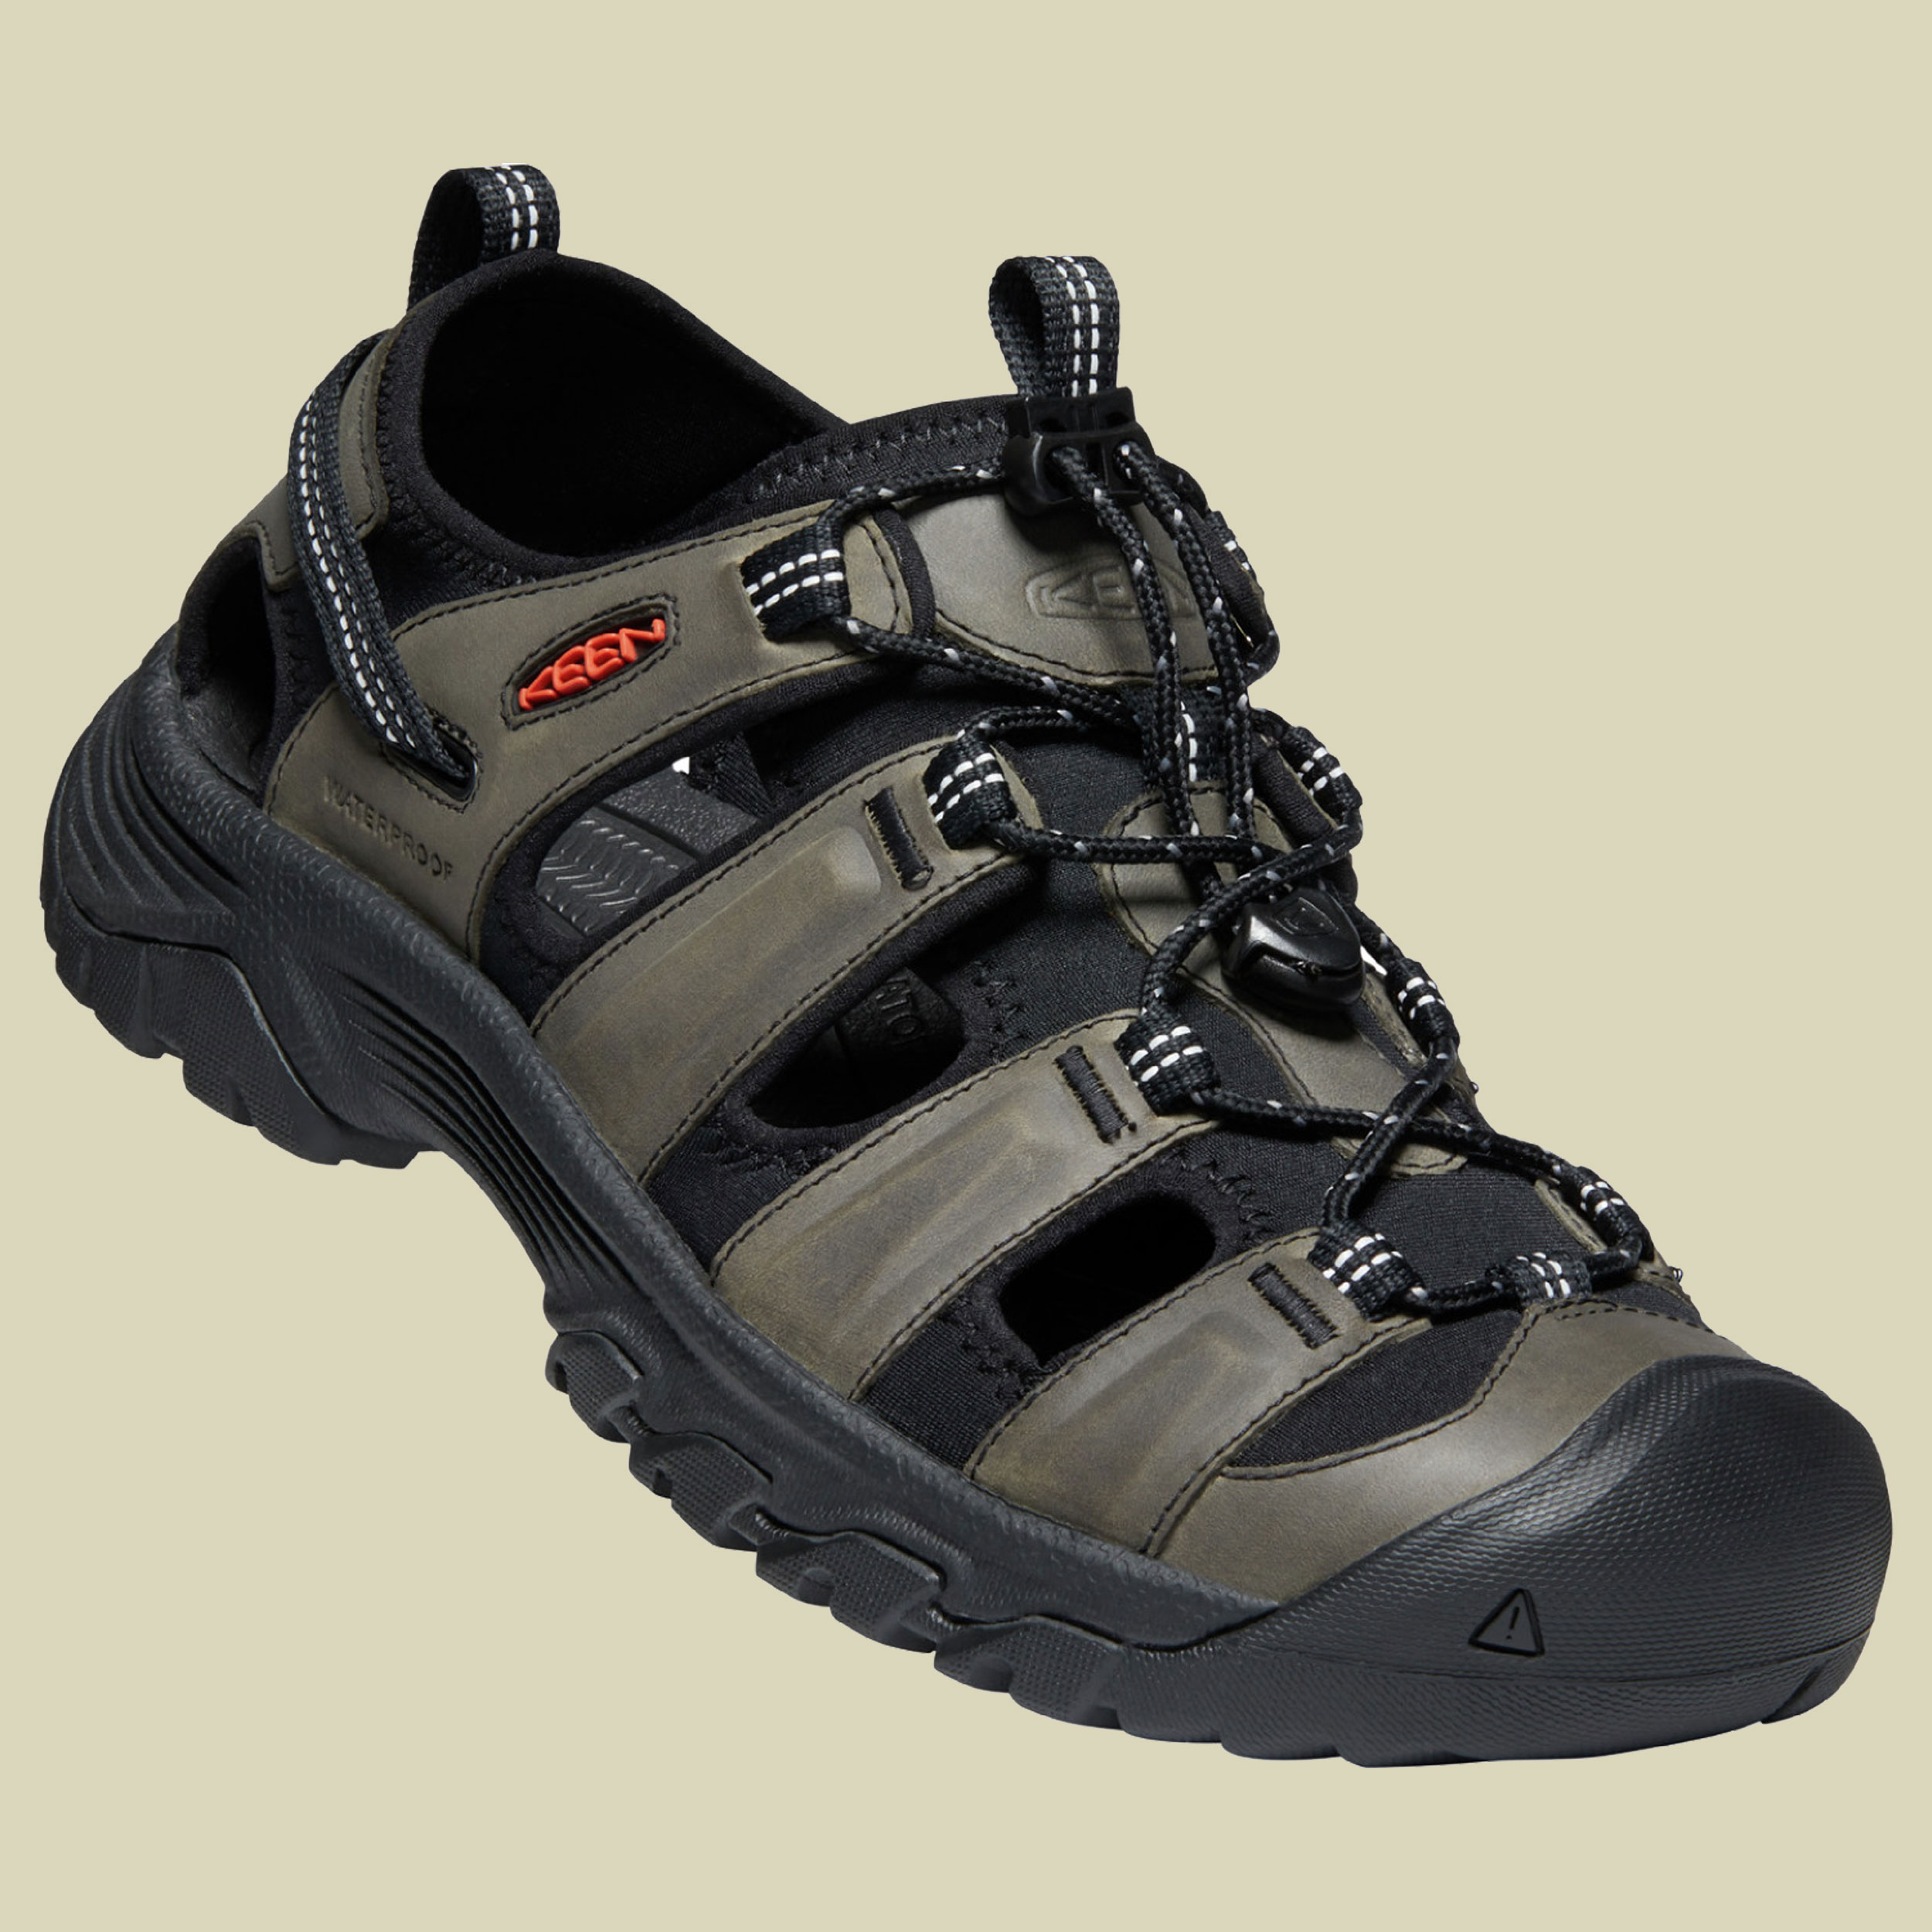 Targhee III Sandal Men Größe UK 8 Farbe grey/black